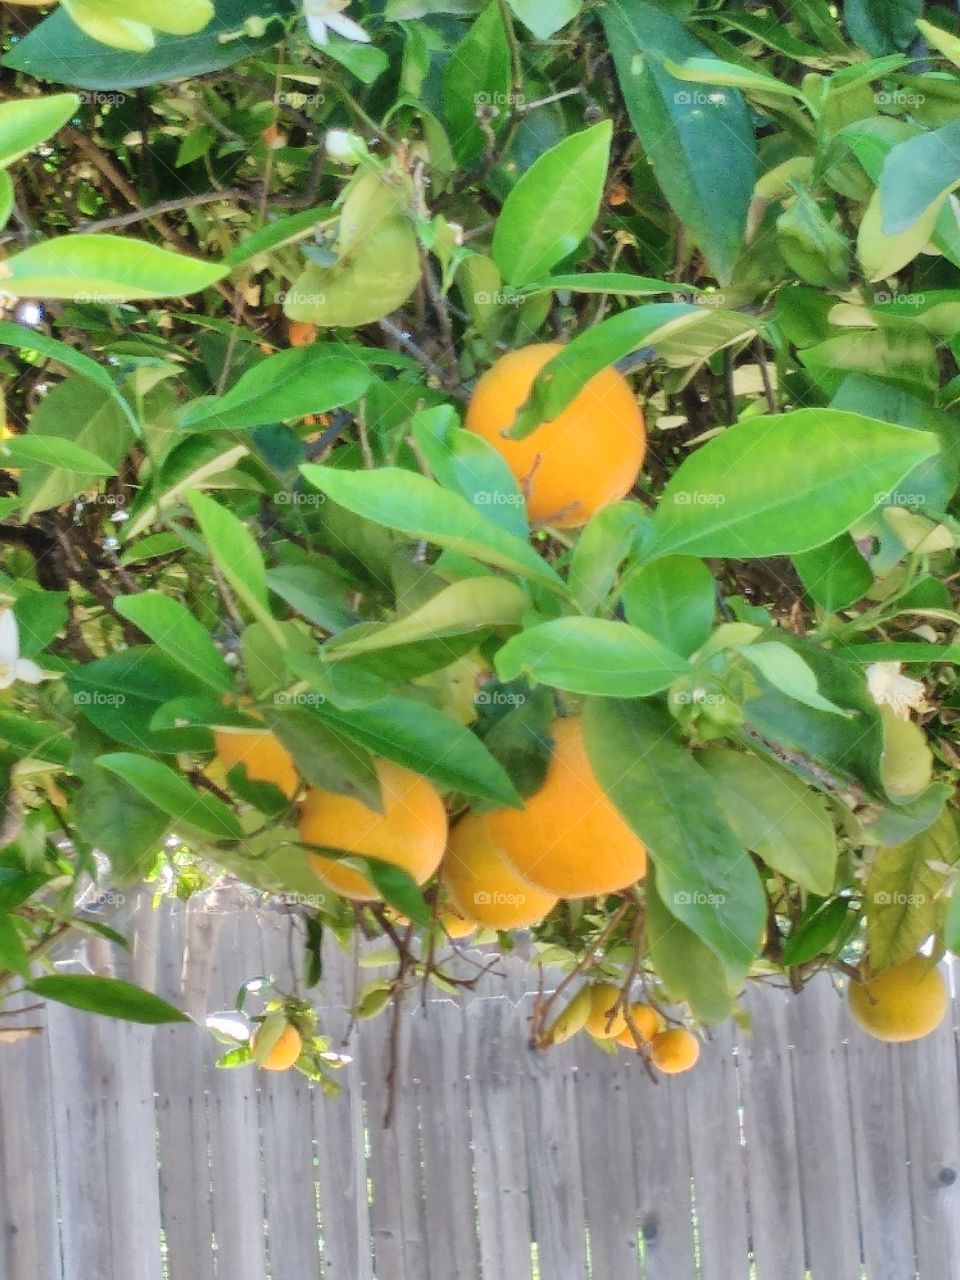 Hanging oranges